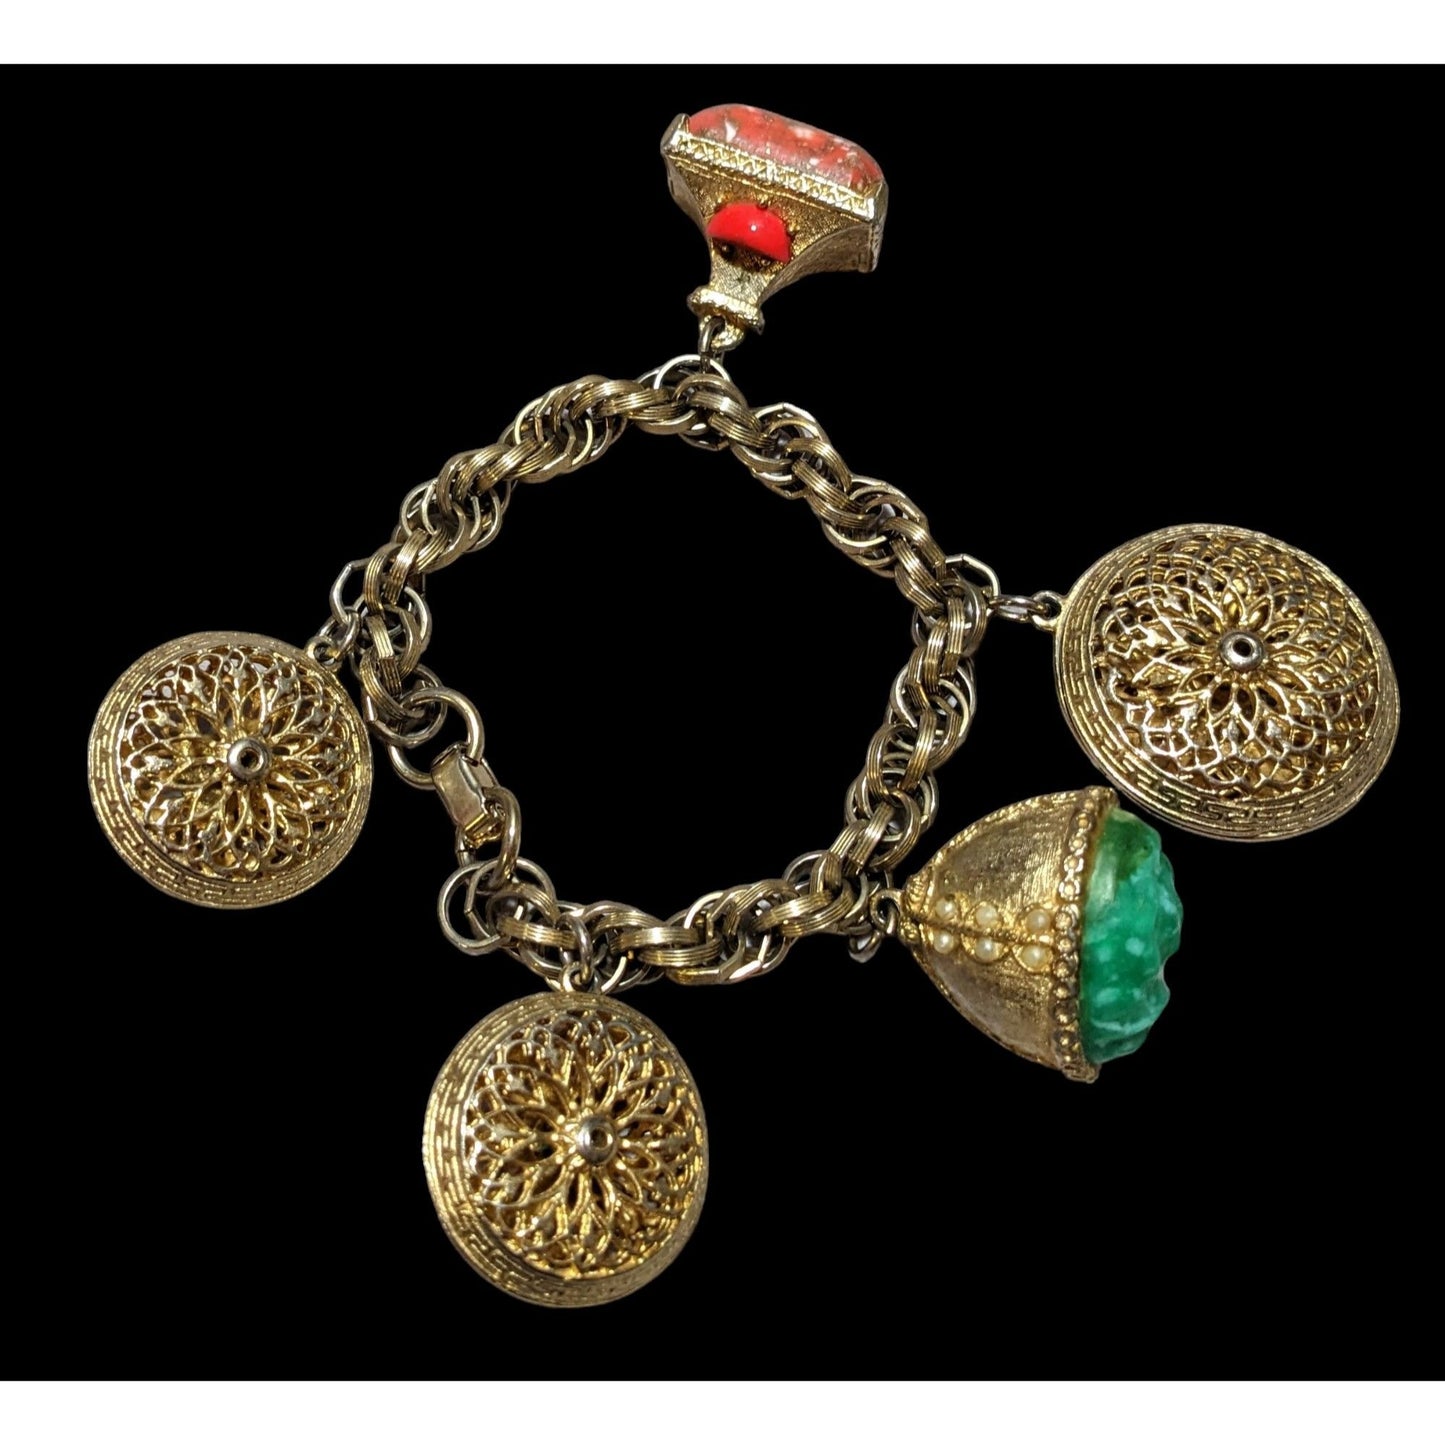 Vintage Etruscan Revival Charm Bracelet